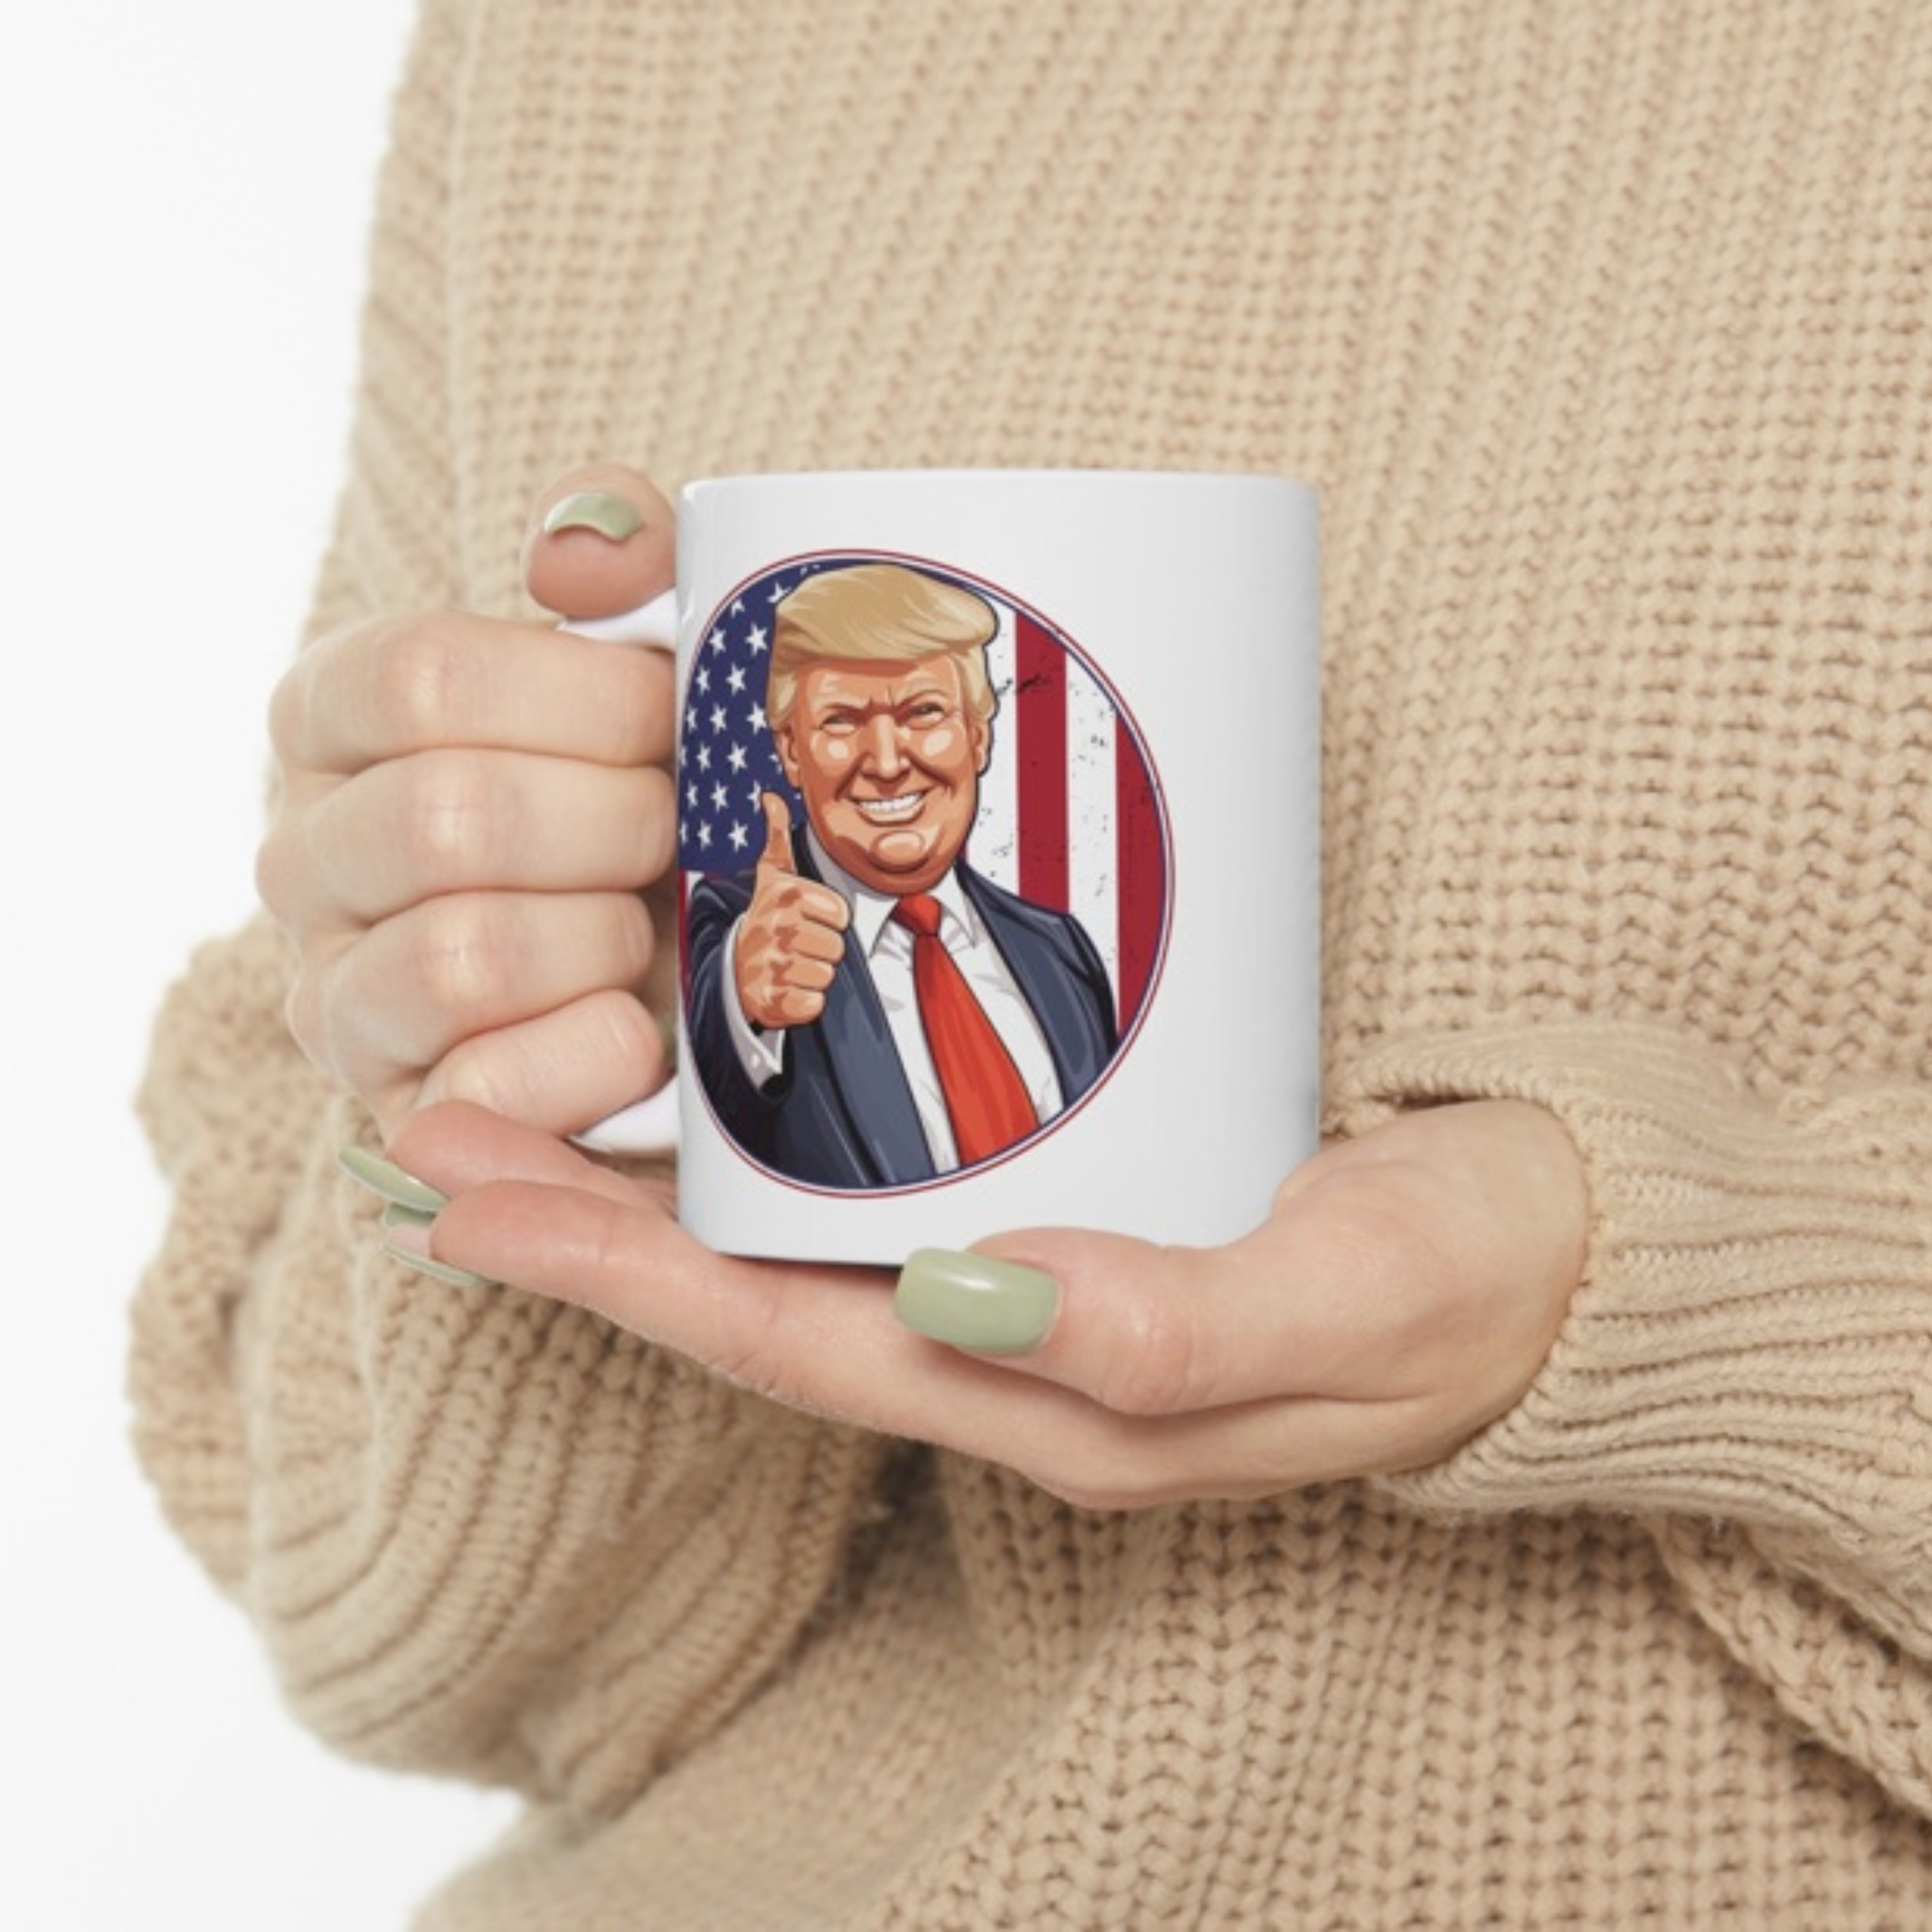 Donald Trump Thumbs Up Mug - DJT - 45 - Soon 47 - 11oz White Ceramic